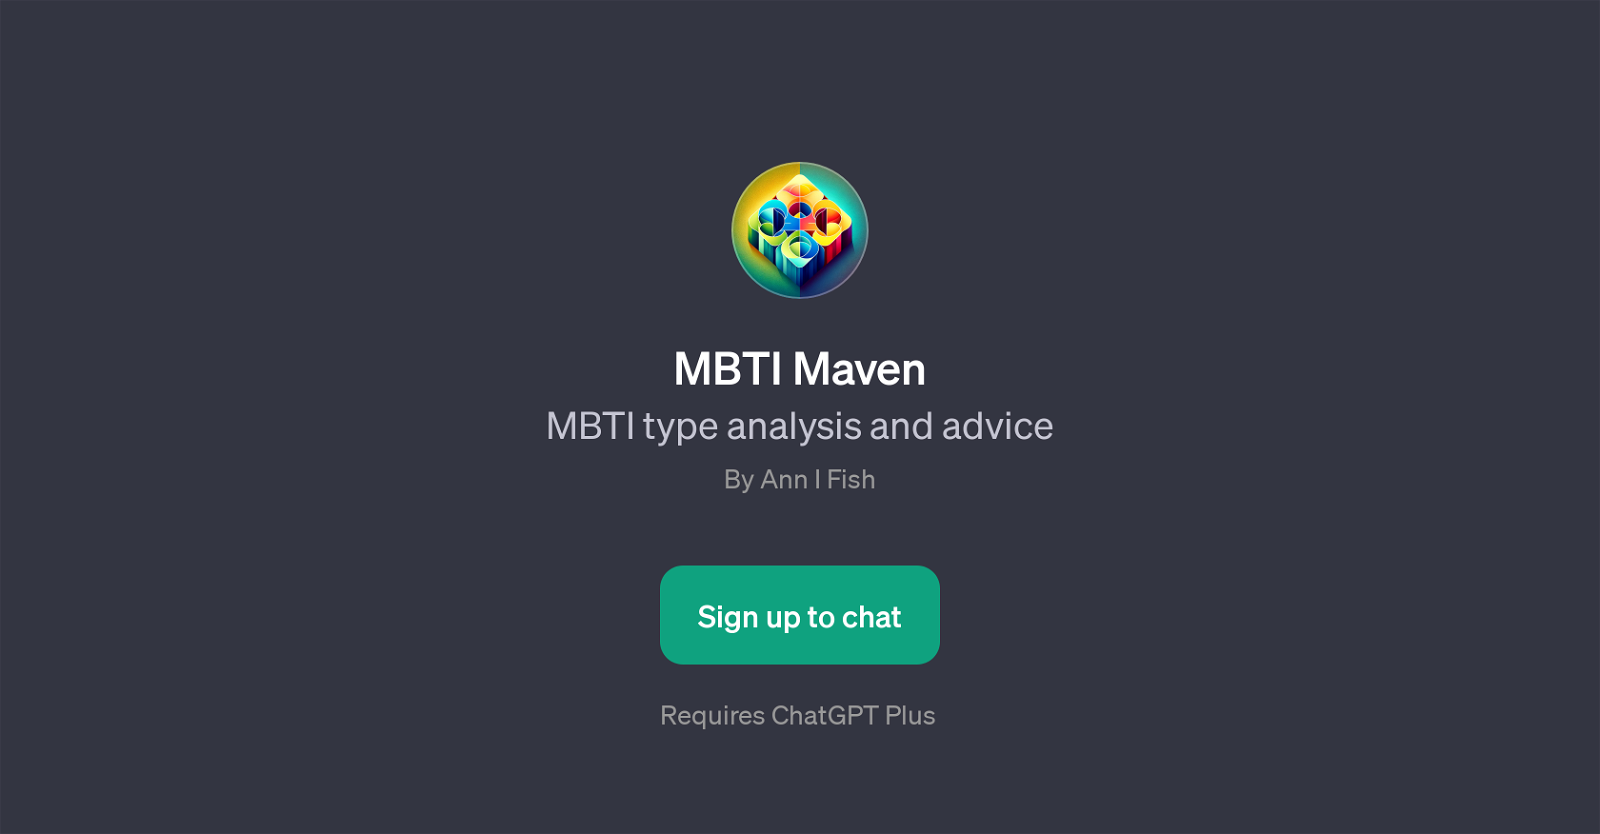 MBTI Maven website